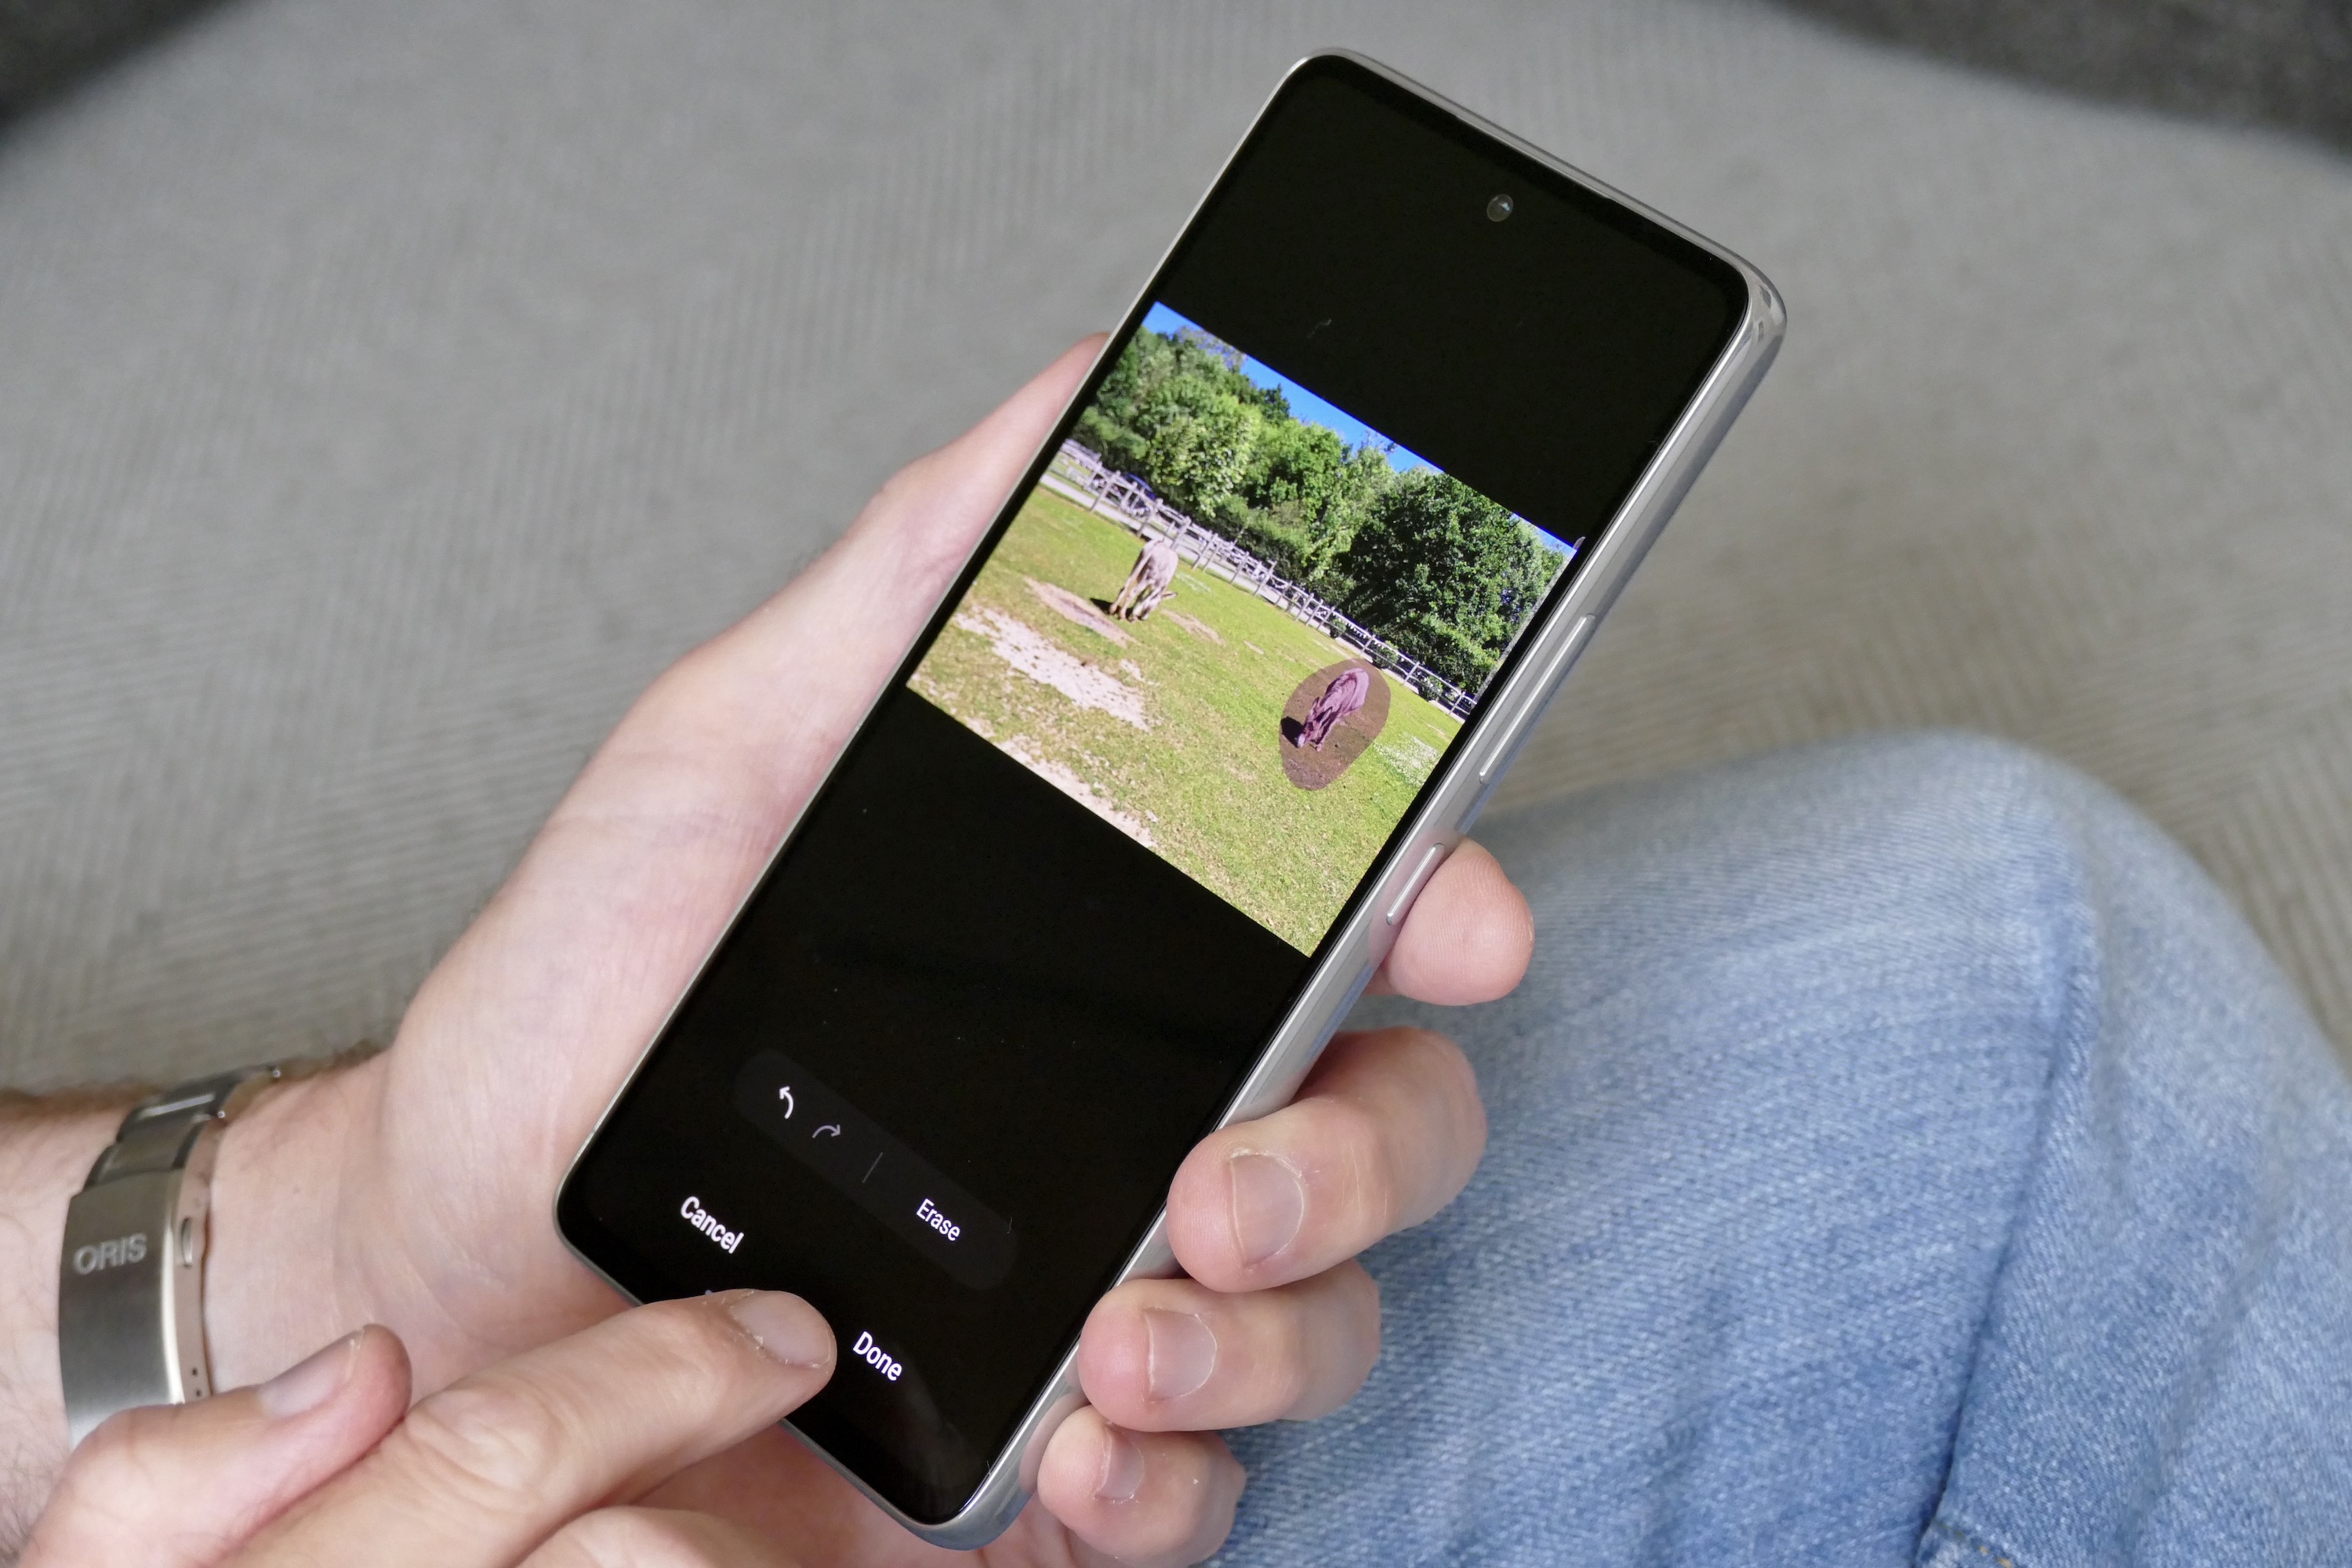 Samsung Galaxy A53 5G Review - Cheap Quad camera phone - Amateur  Photographer